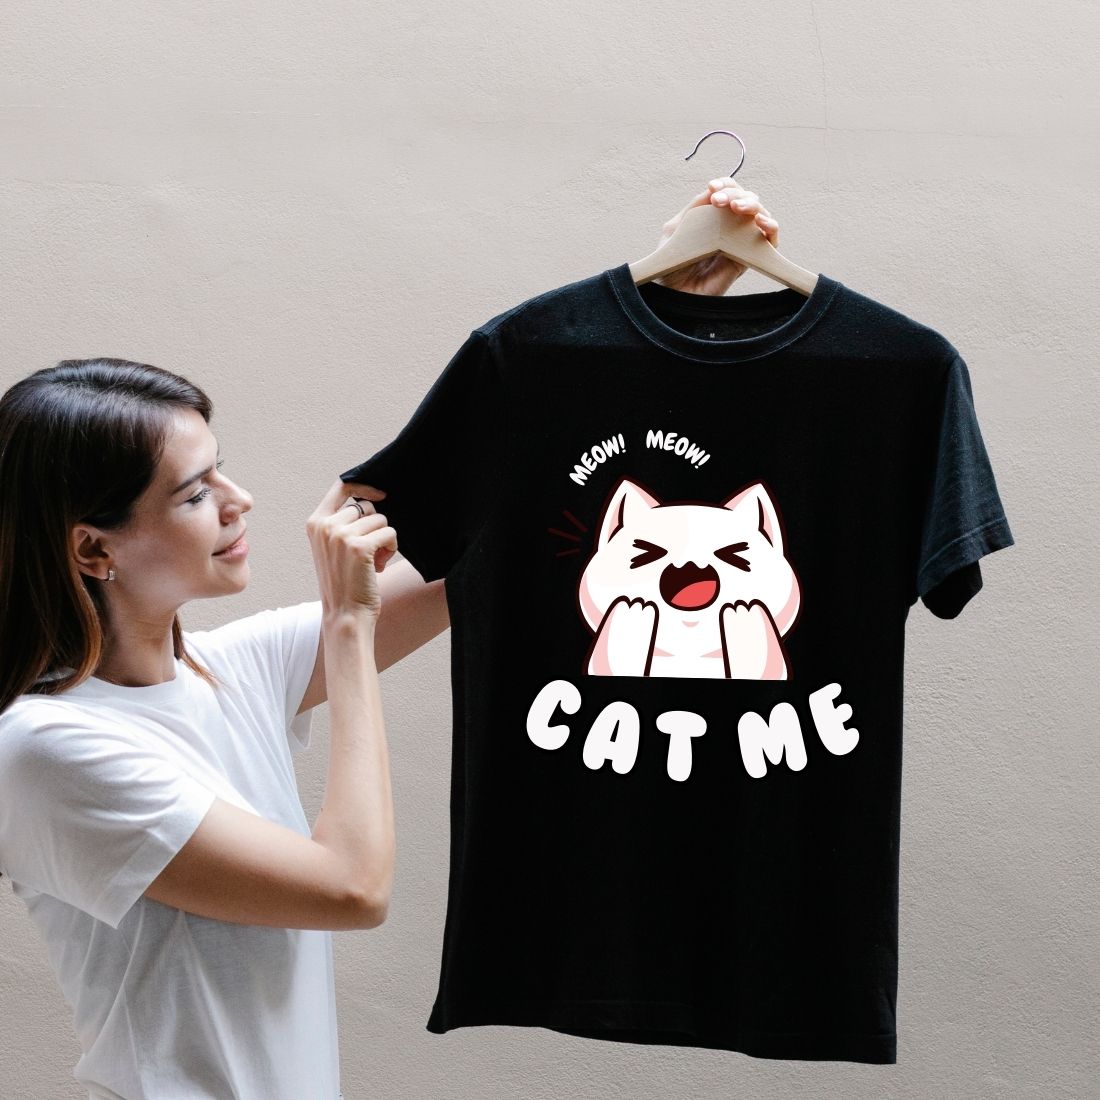 Cute design "Cat me" preview image.